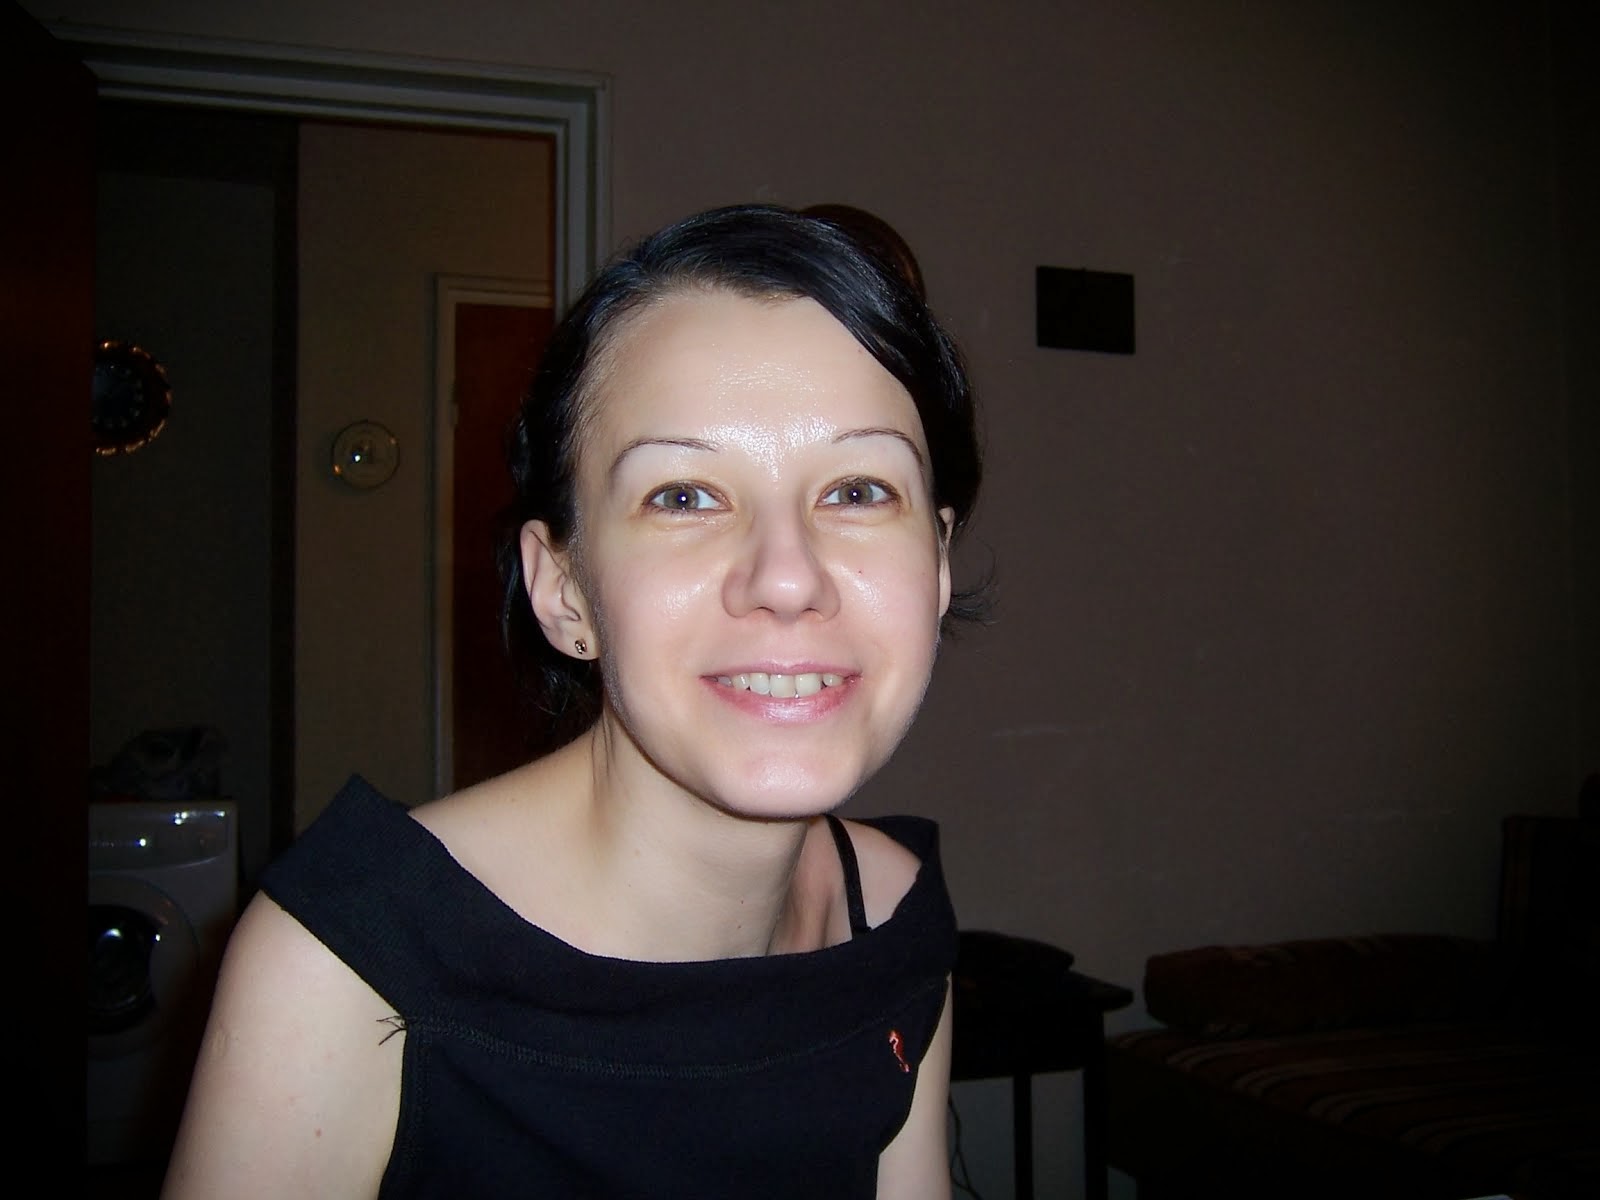 Olivia Maria N. Marcov, august 2006, Bucuresti